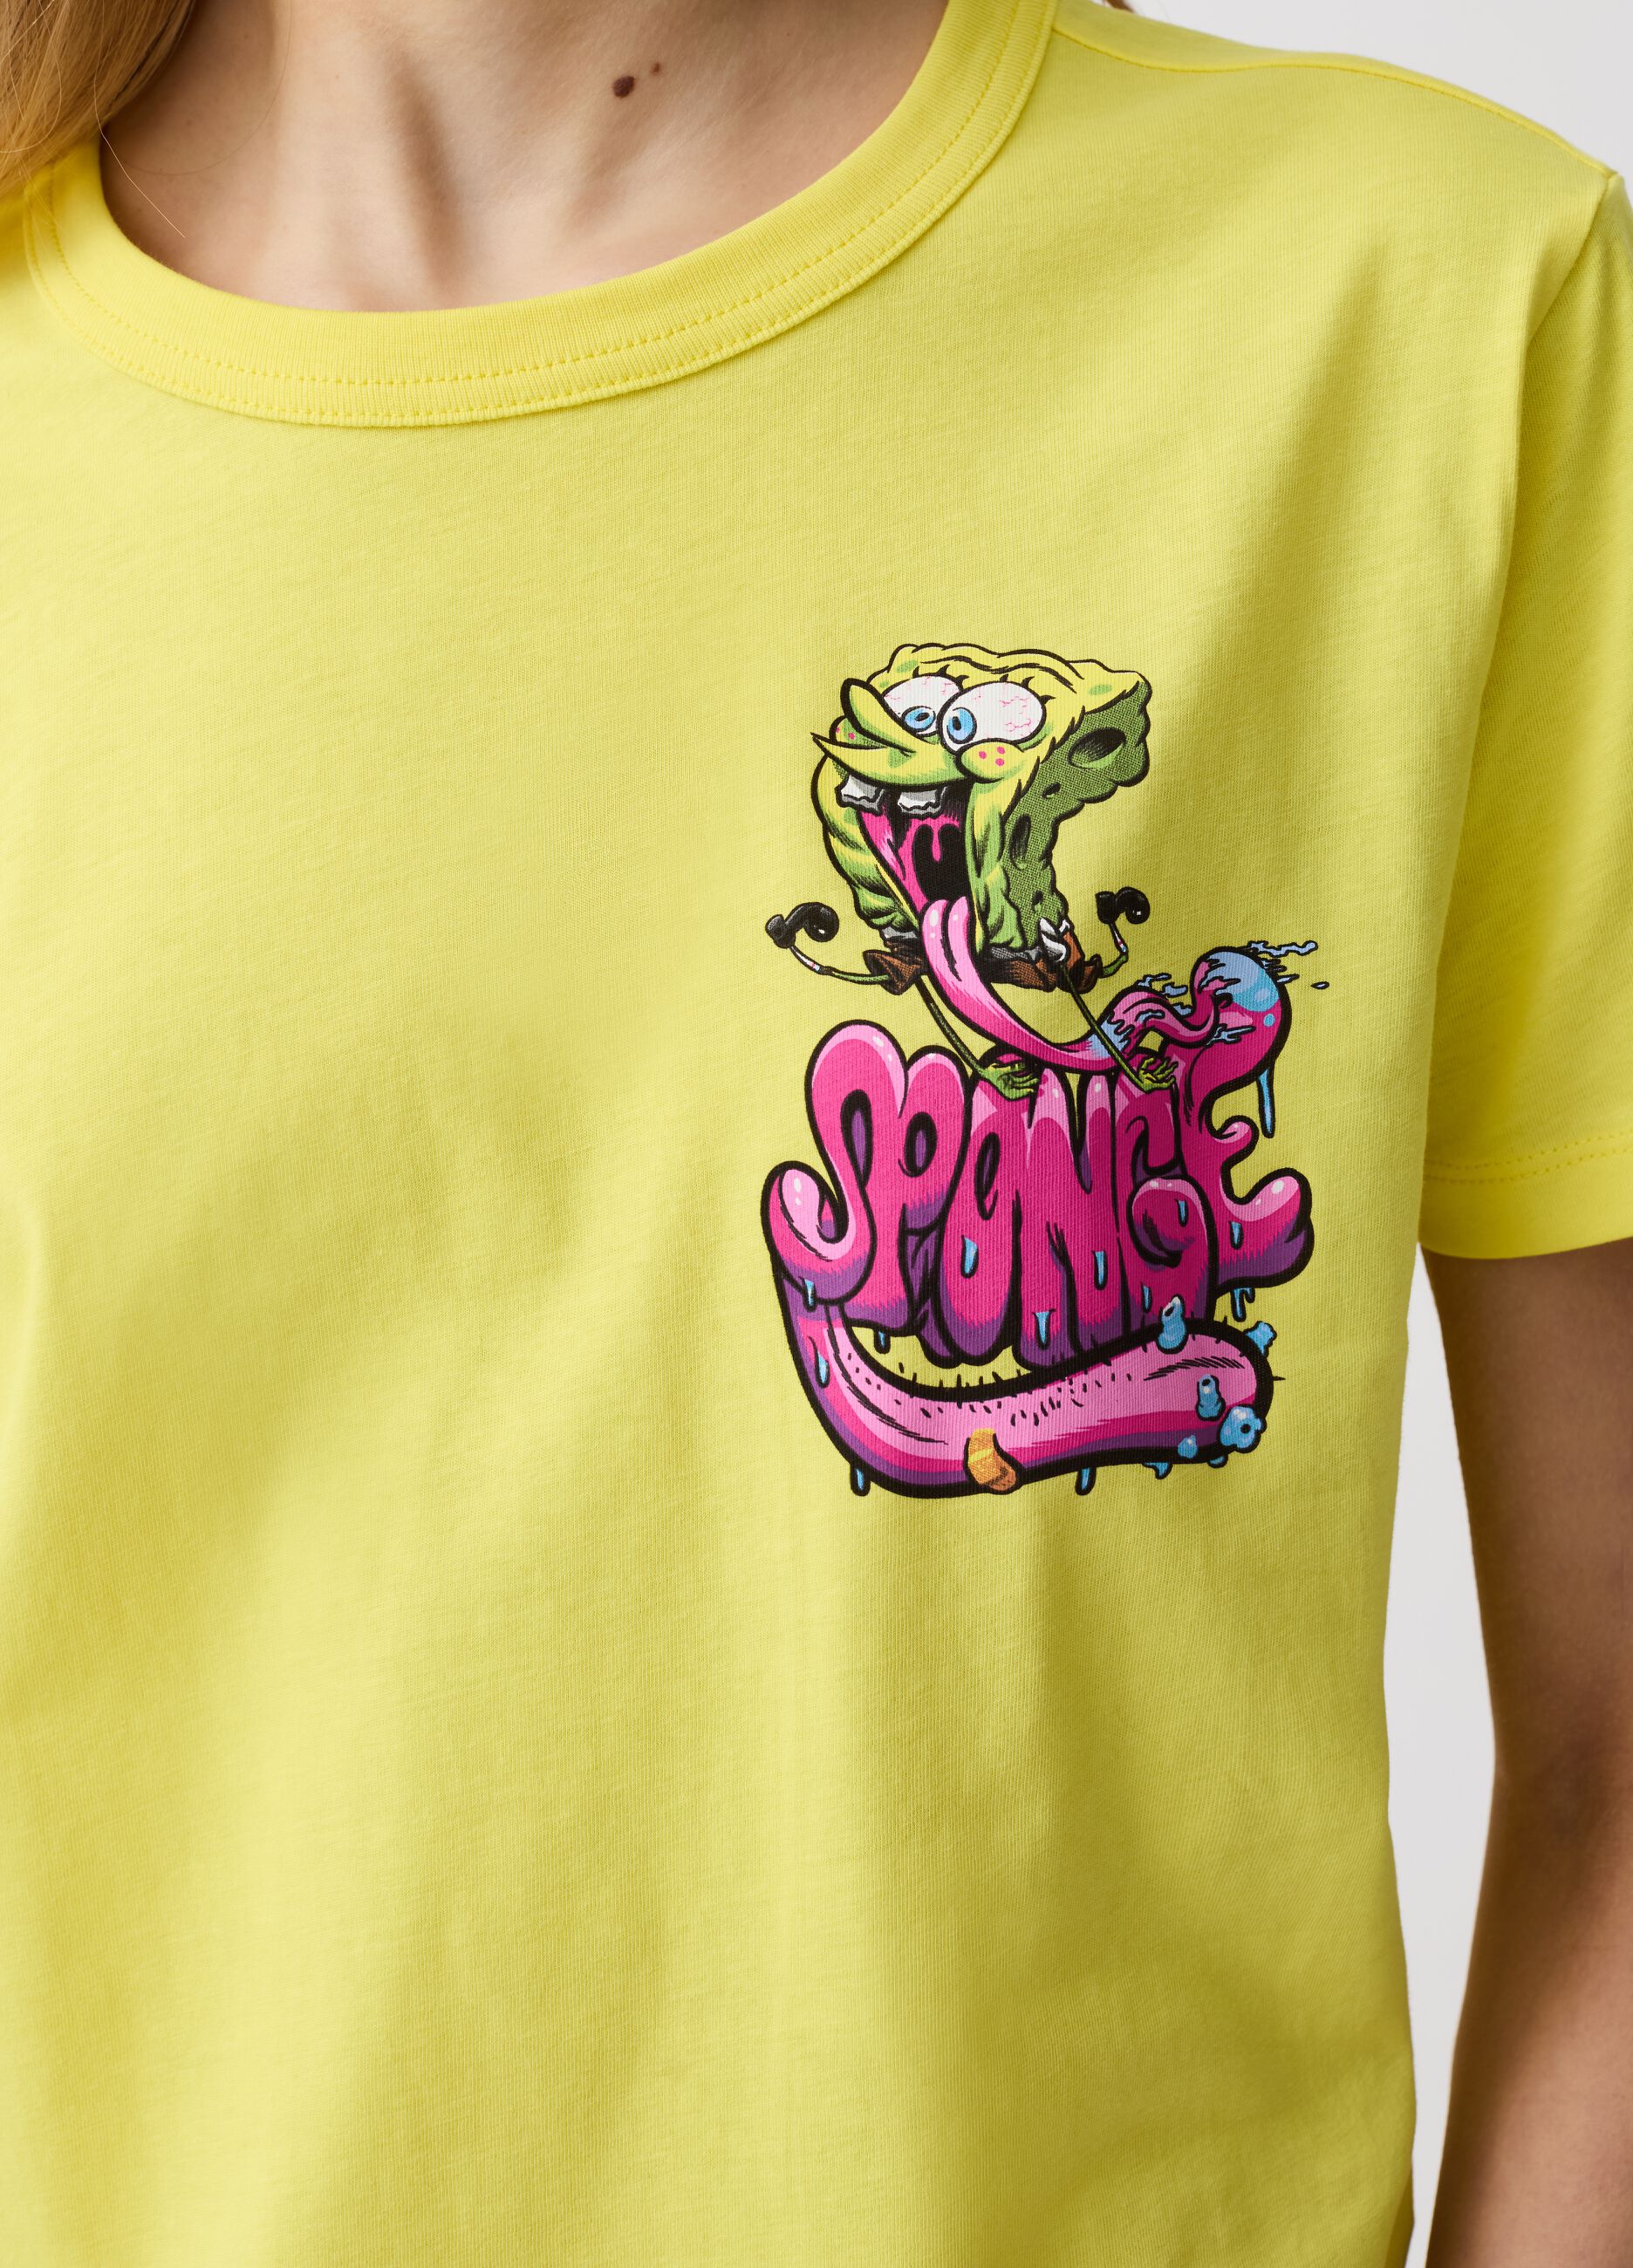 Cotton T-shirt with SpongeBob print